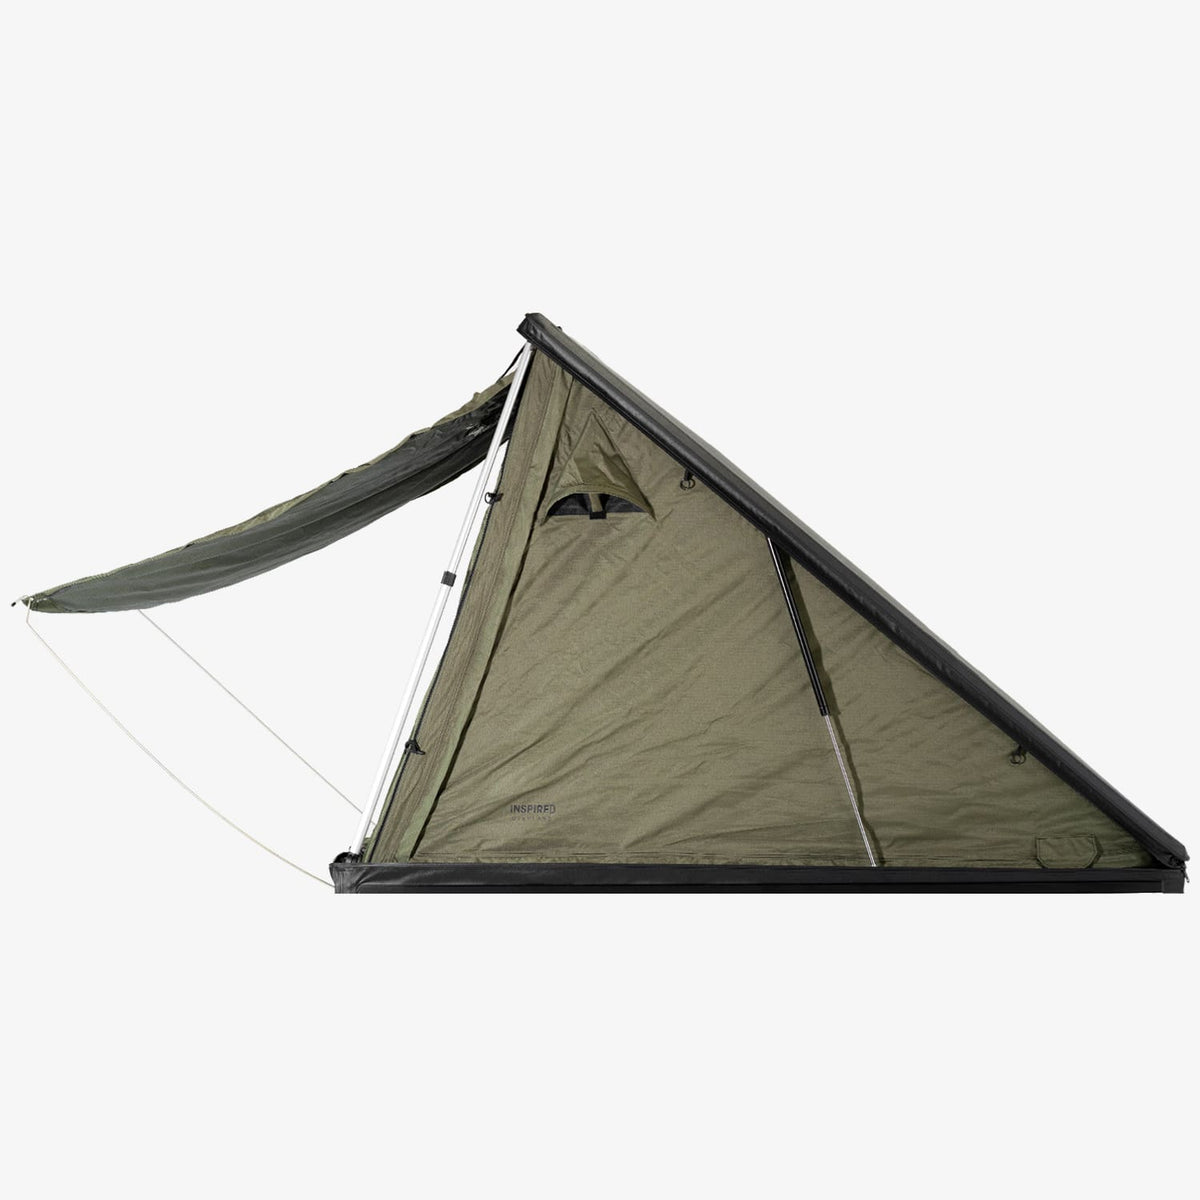 Inspired Overland IO XL Lightweight Roof Top Tent